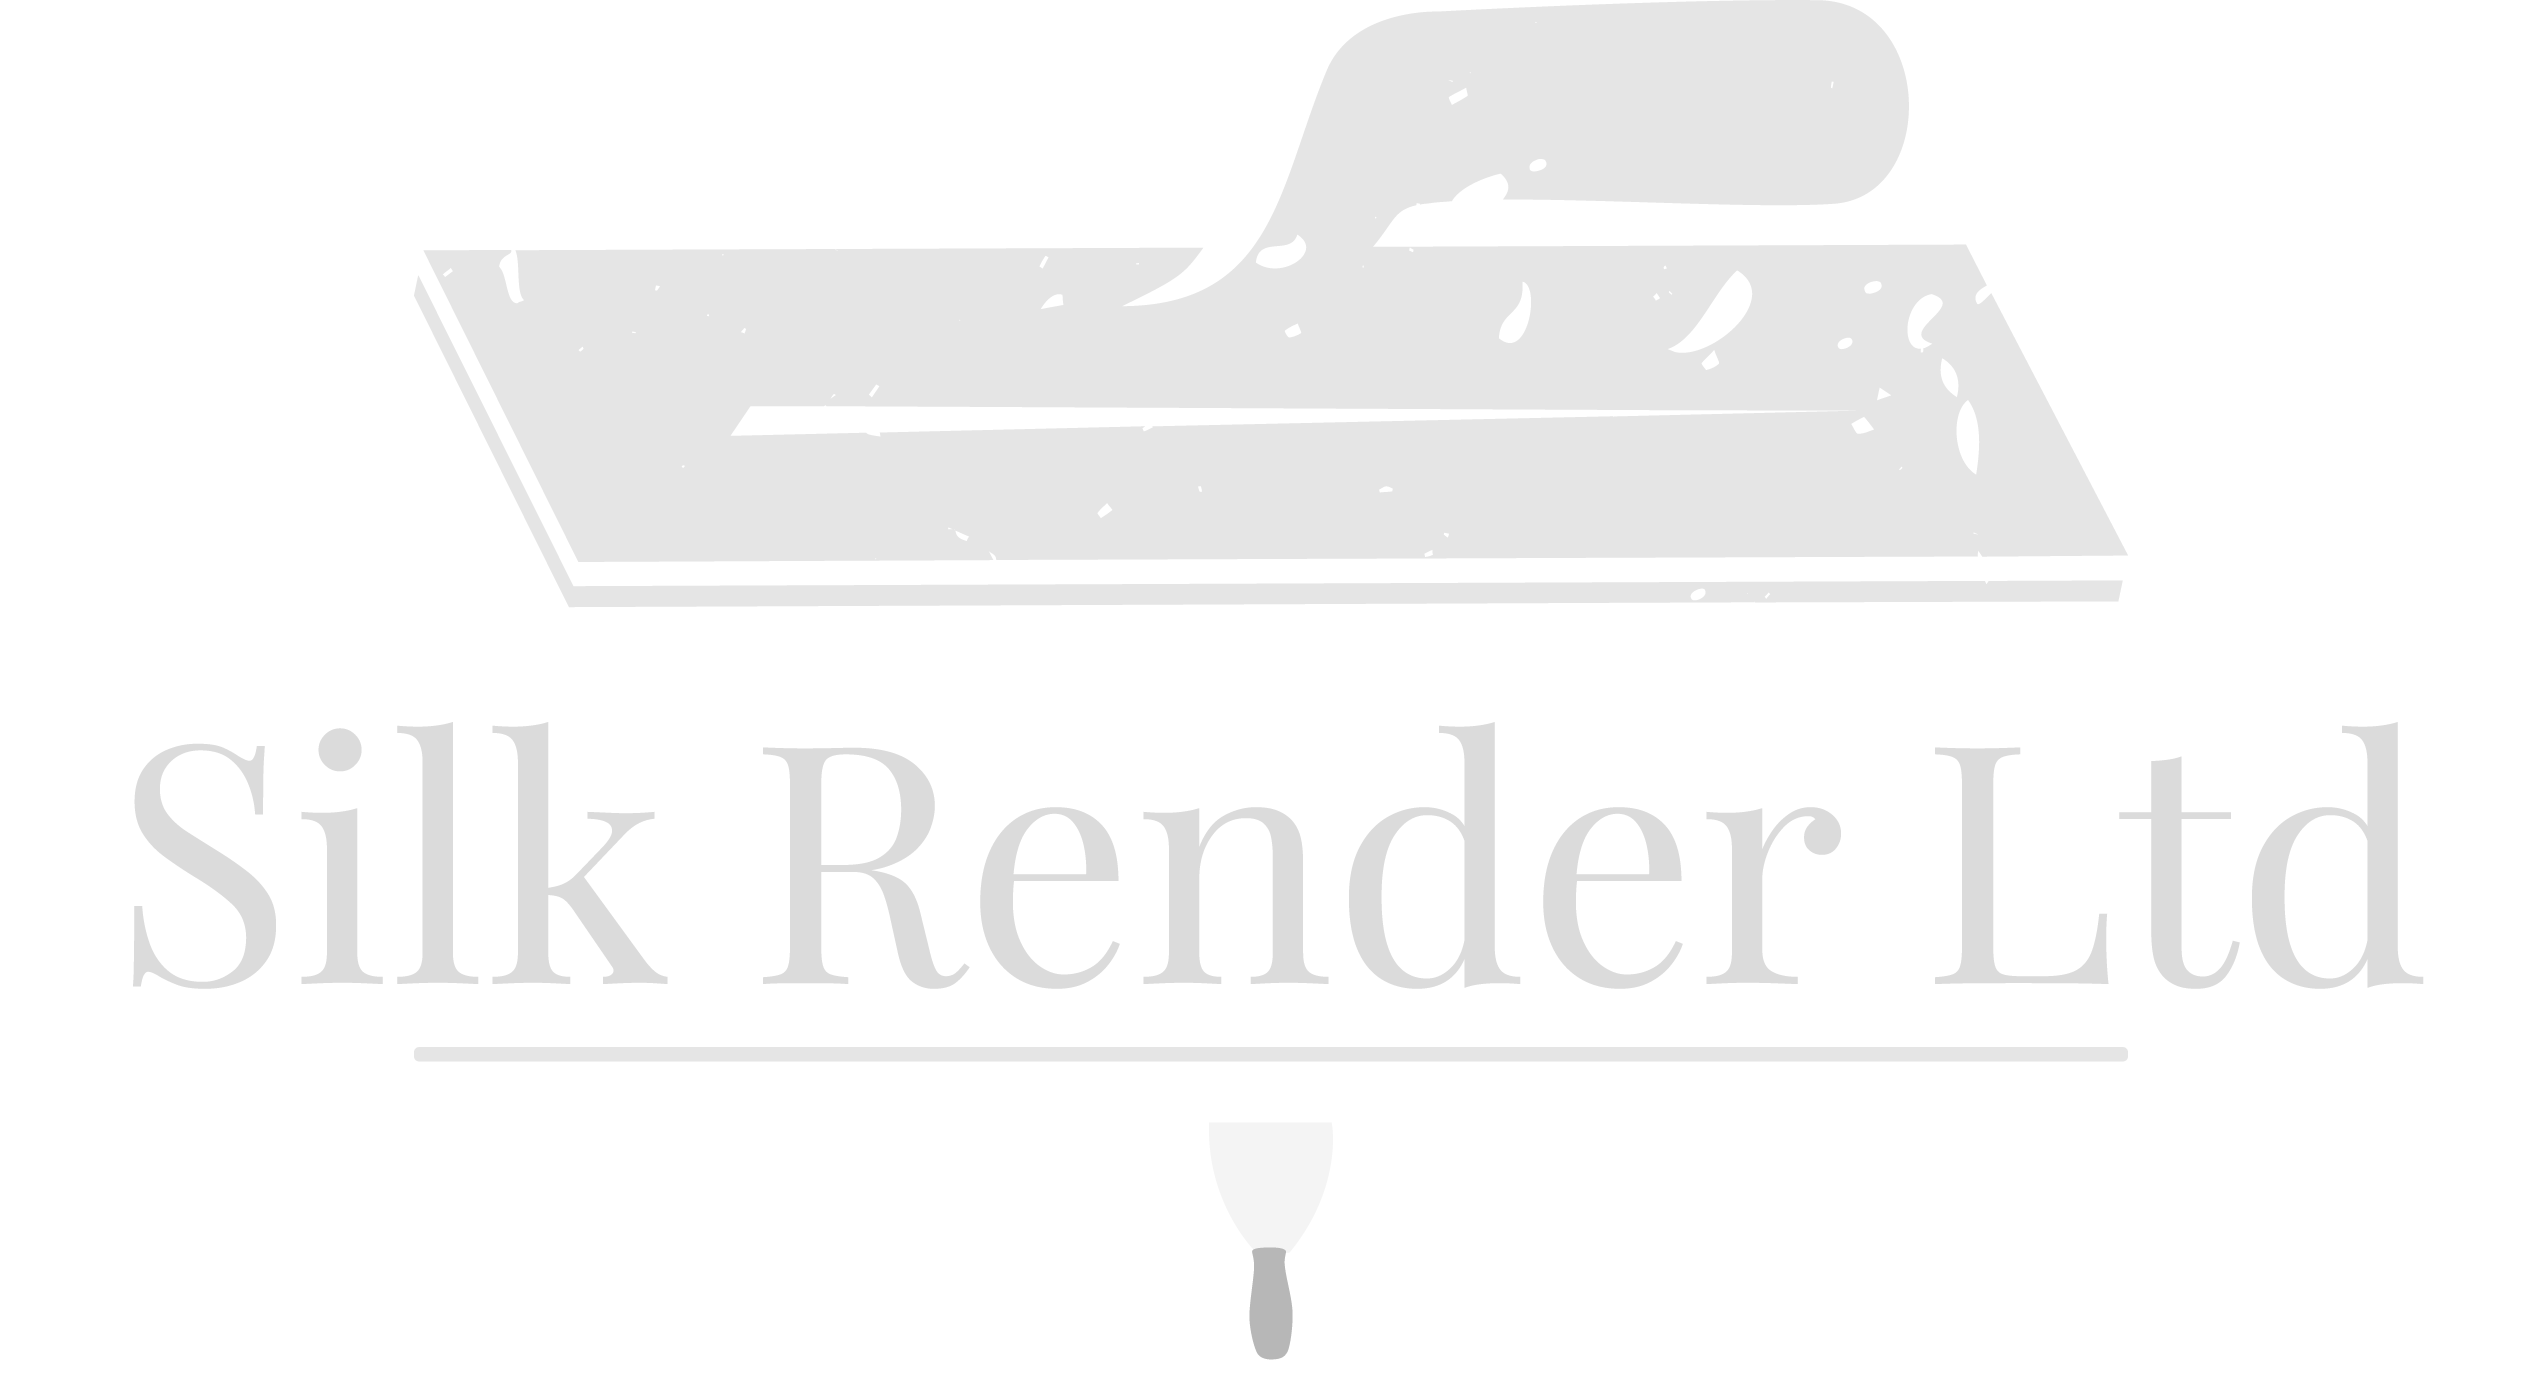 Silk Render Ltd logo